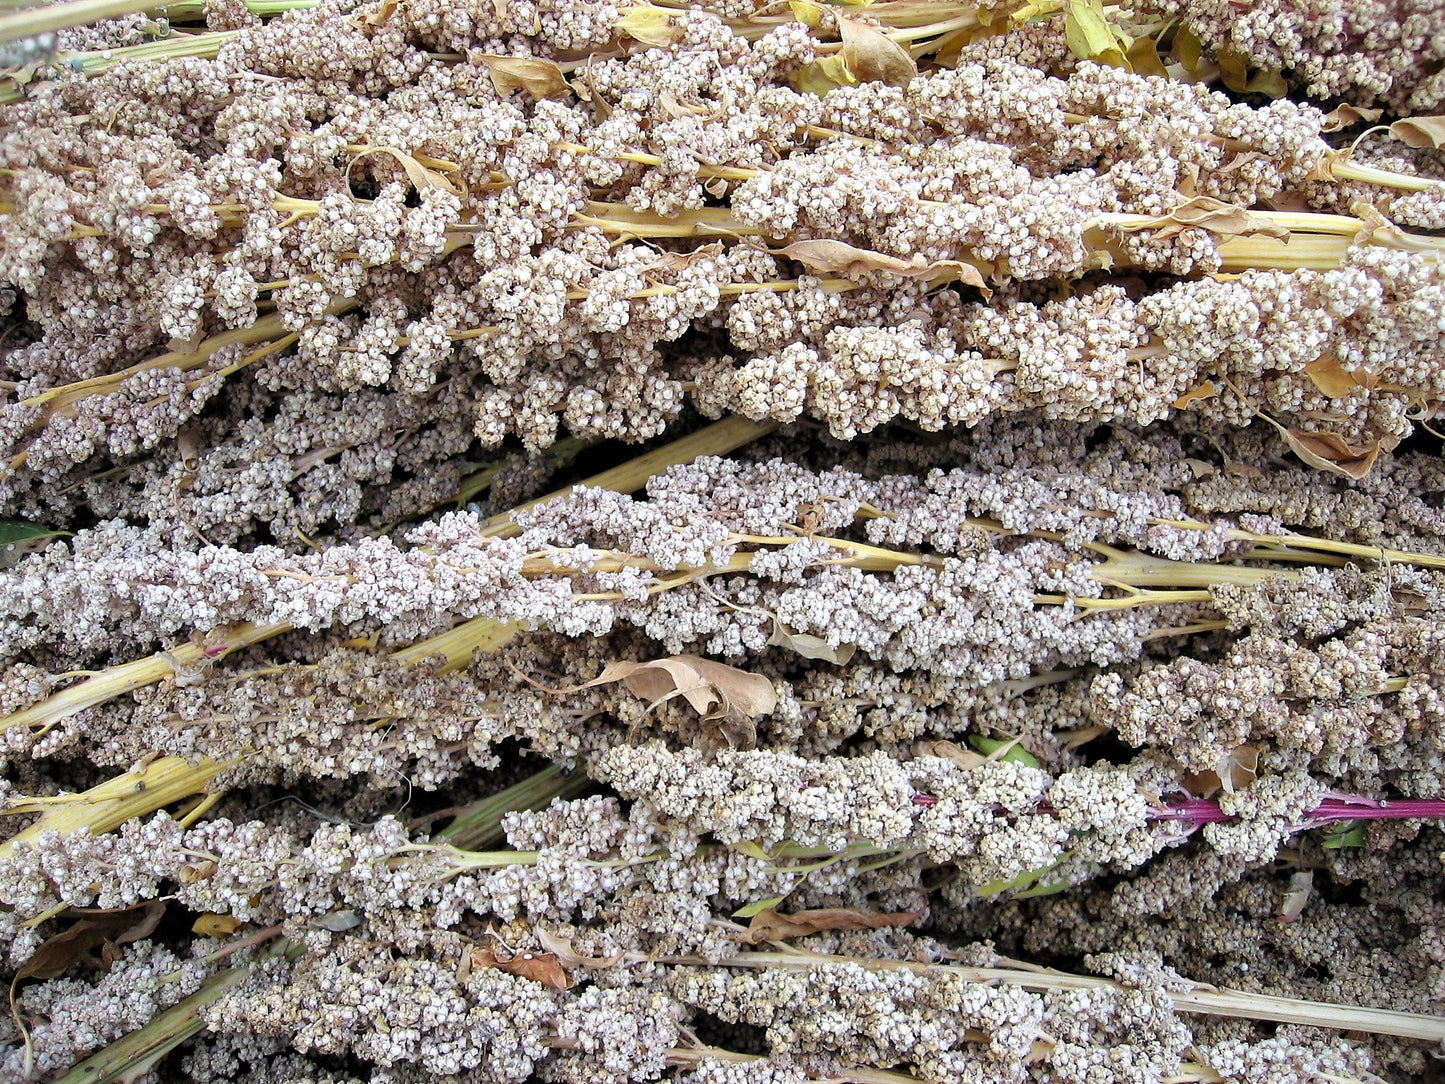 100 Organic PEPPERMINT QUINOA Grain Chenopodium Quinoa White & Green Heads - White Seeds